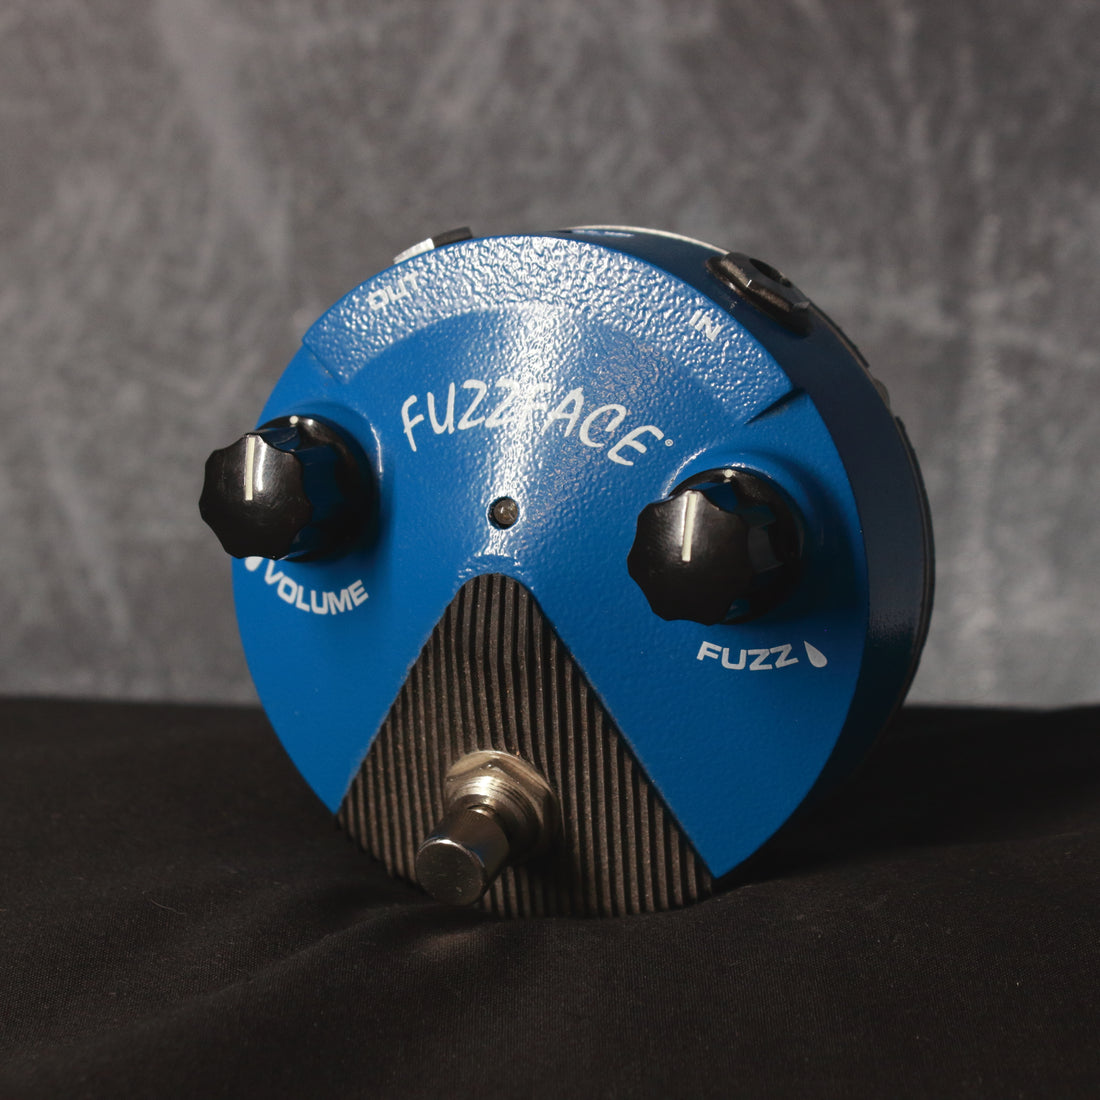 Dunlop FFM1 Silicon Fuzz Face Mini Pedal